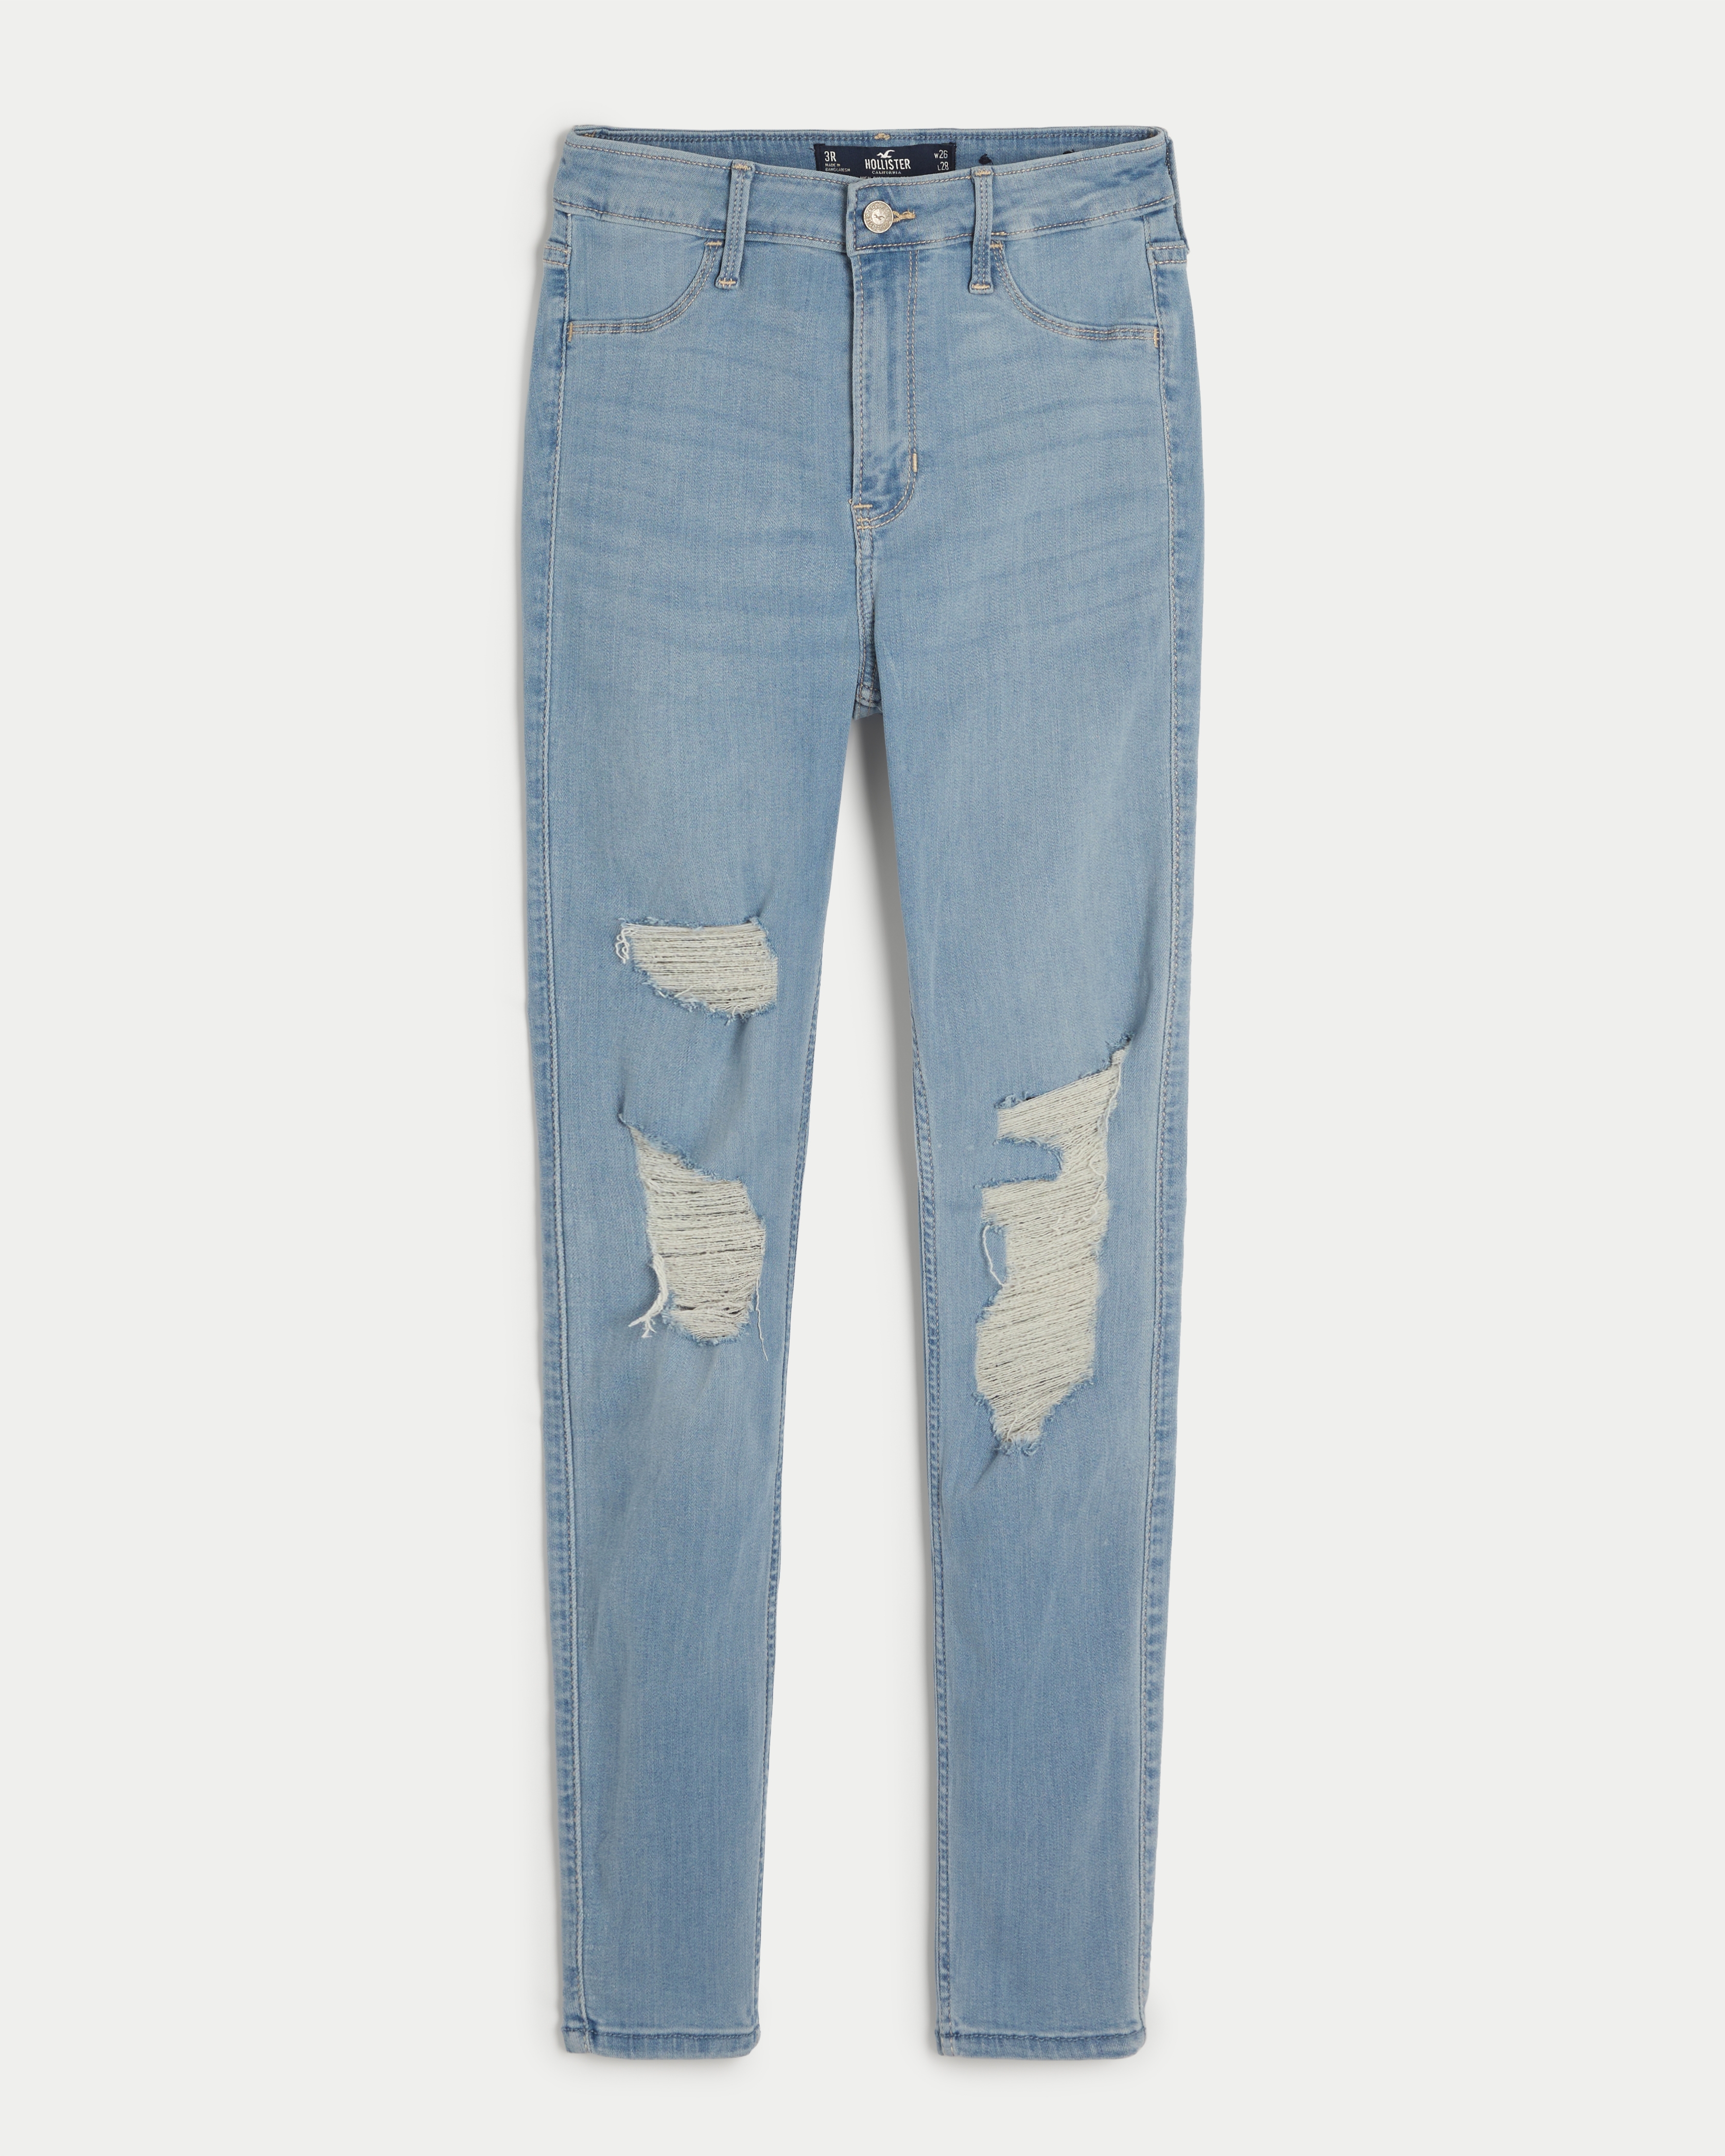 hollister extra short jeans